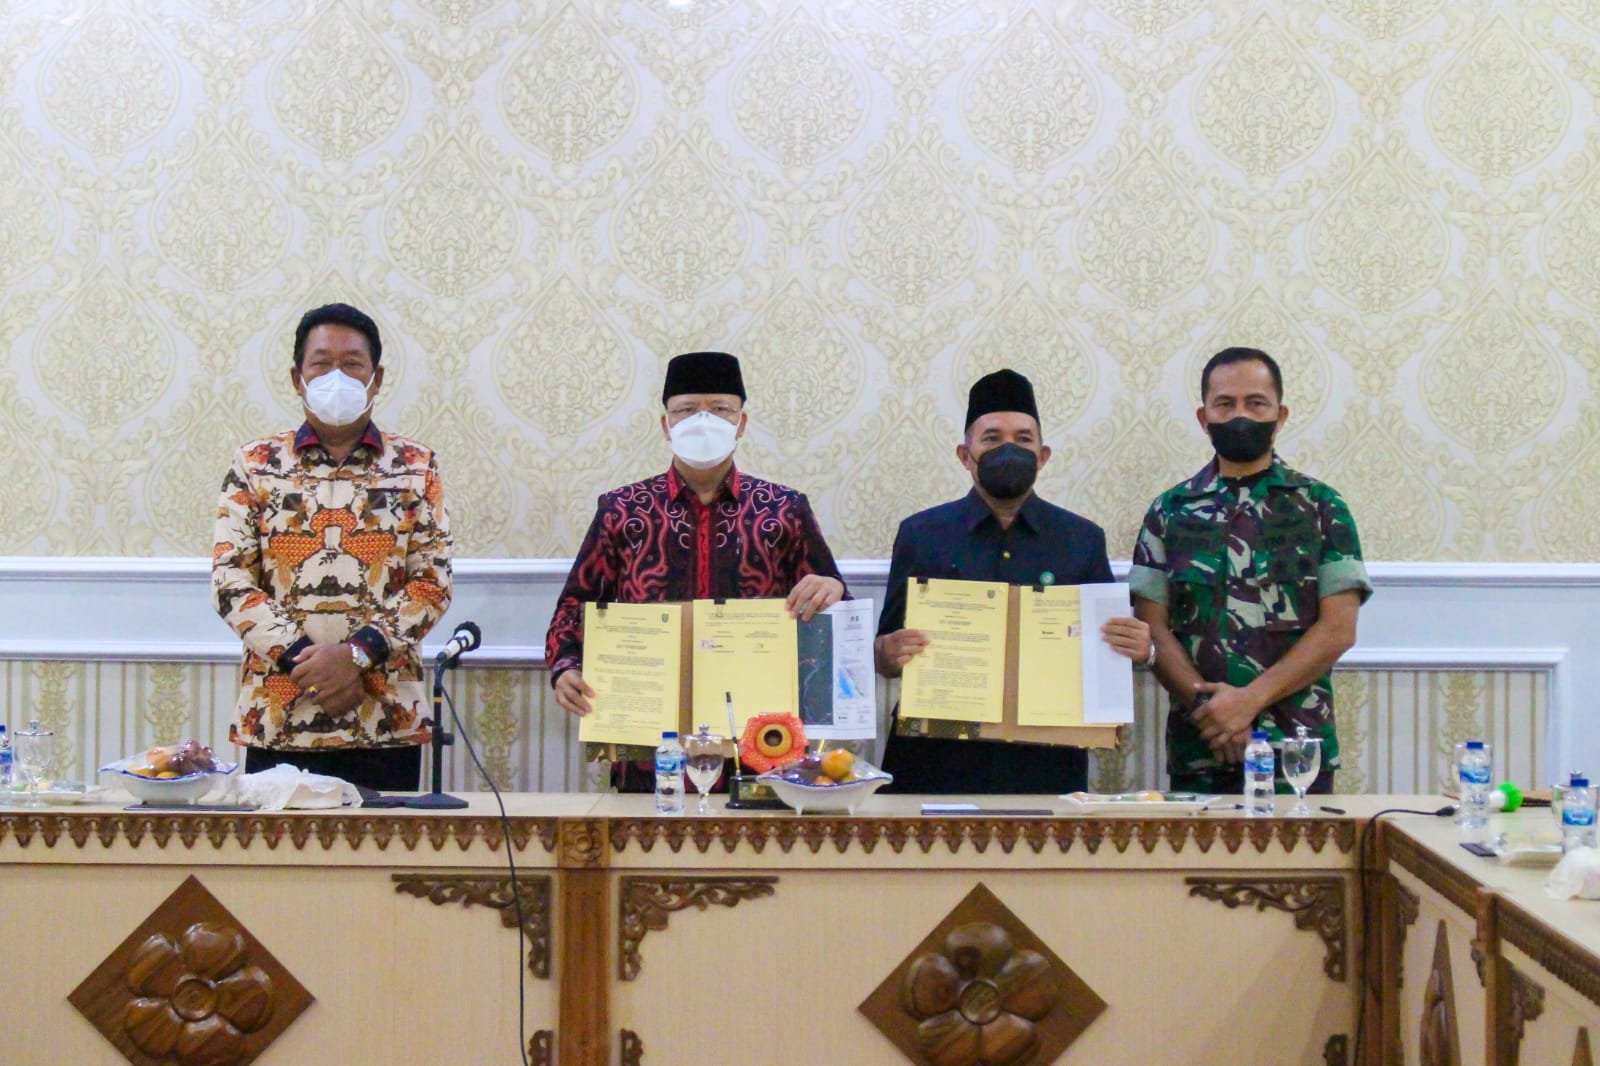 Konektivitas Padang Capo Seluma - Empat Lawang Sumsel akan Dibuka